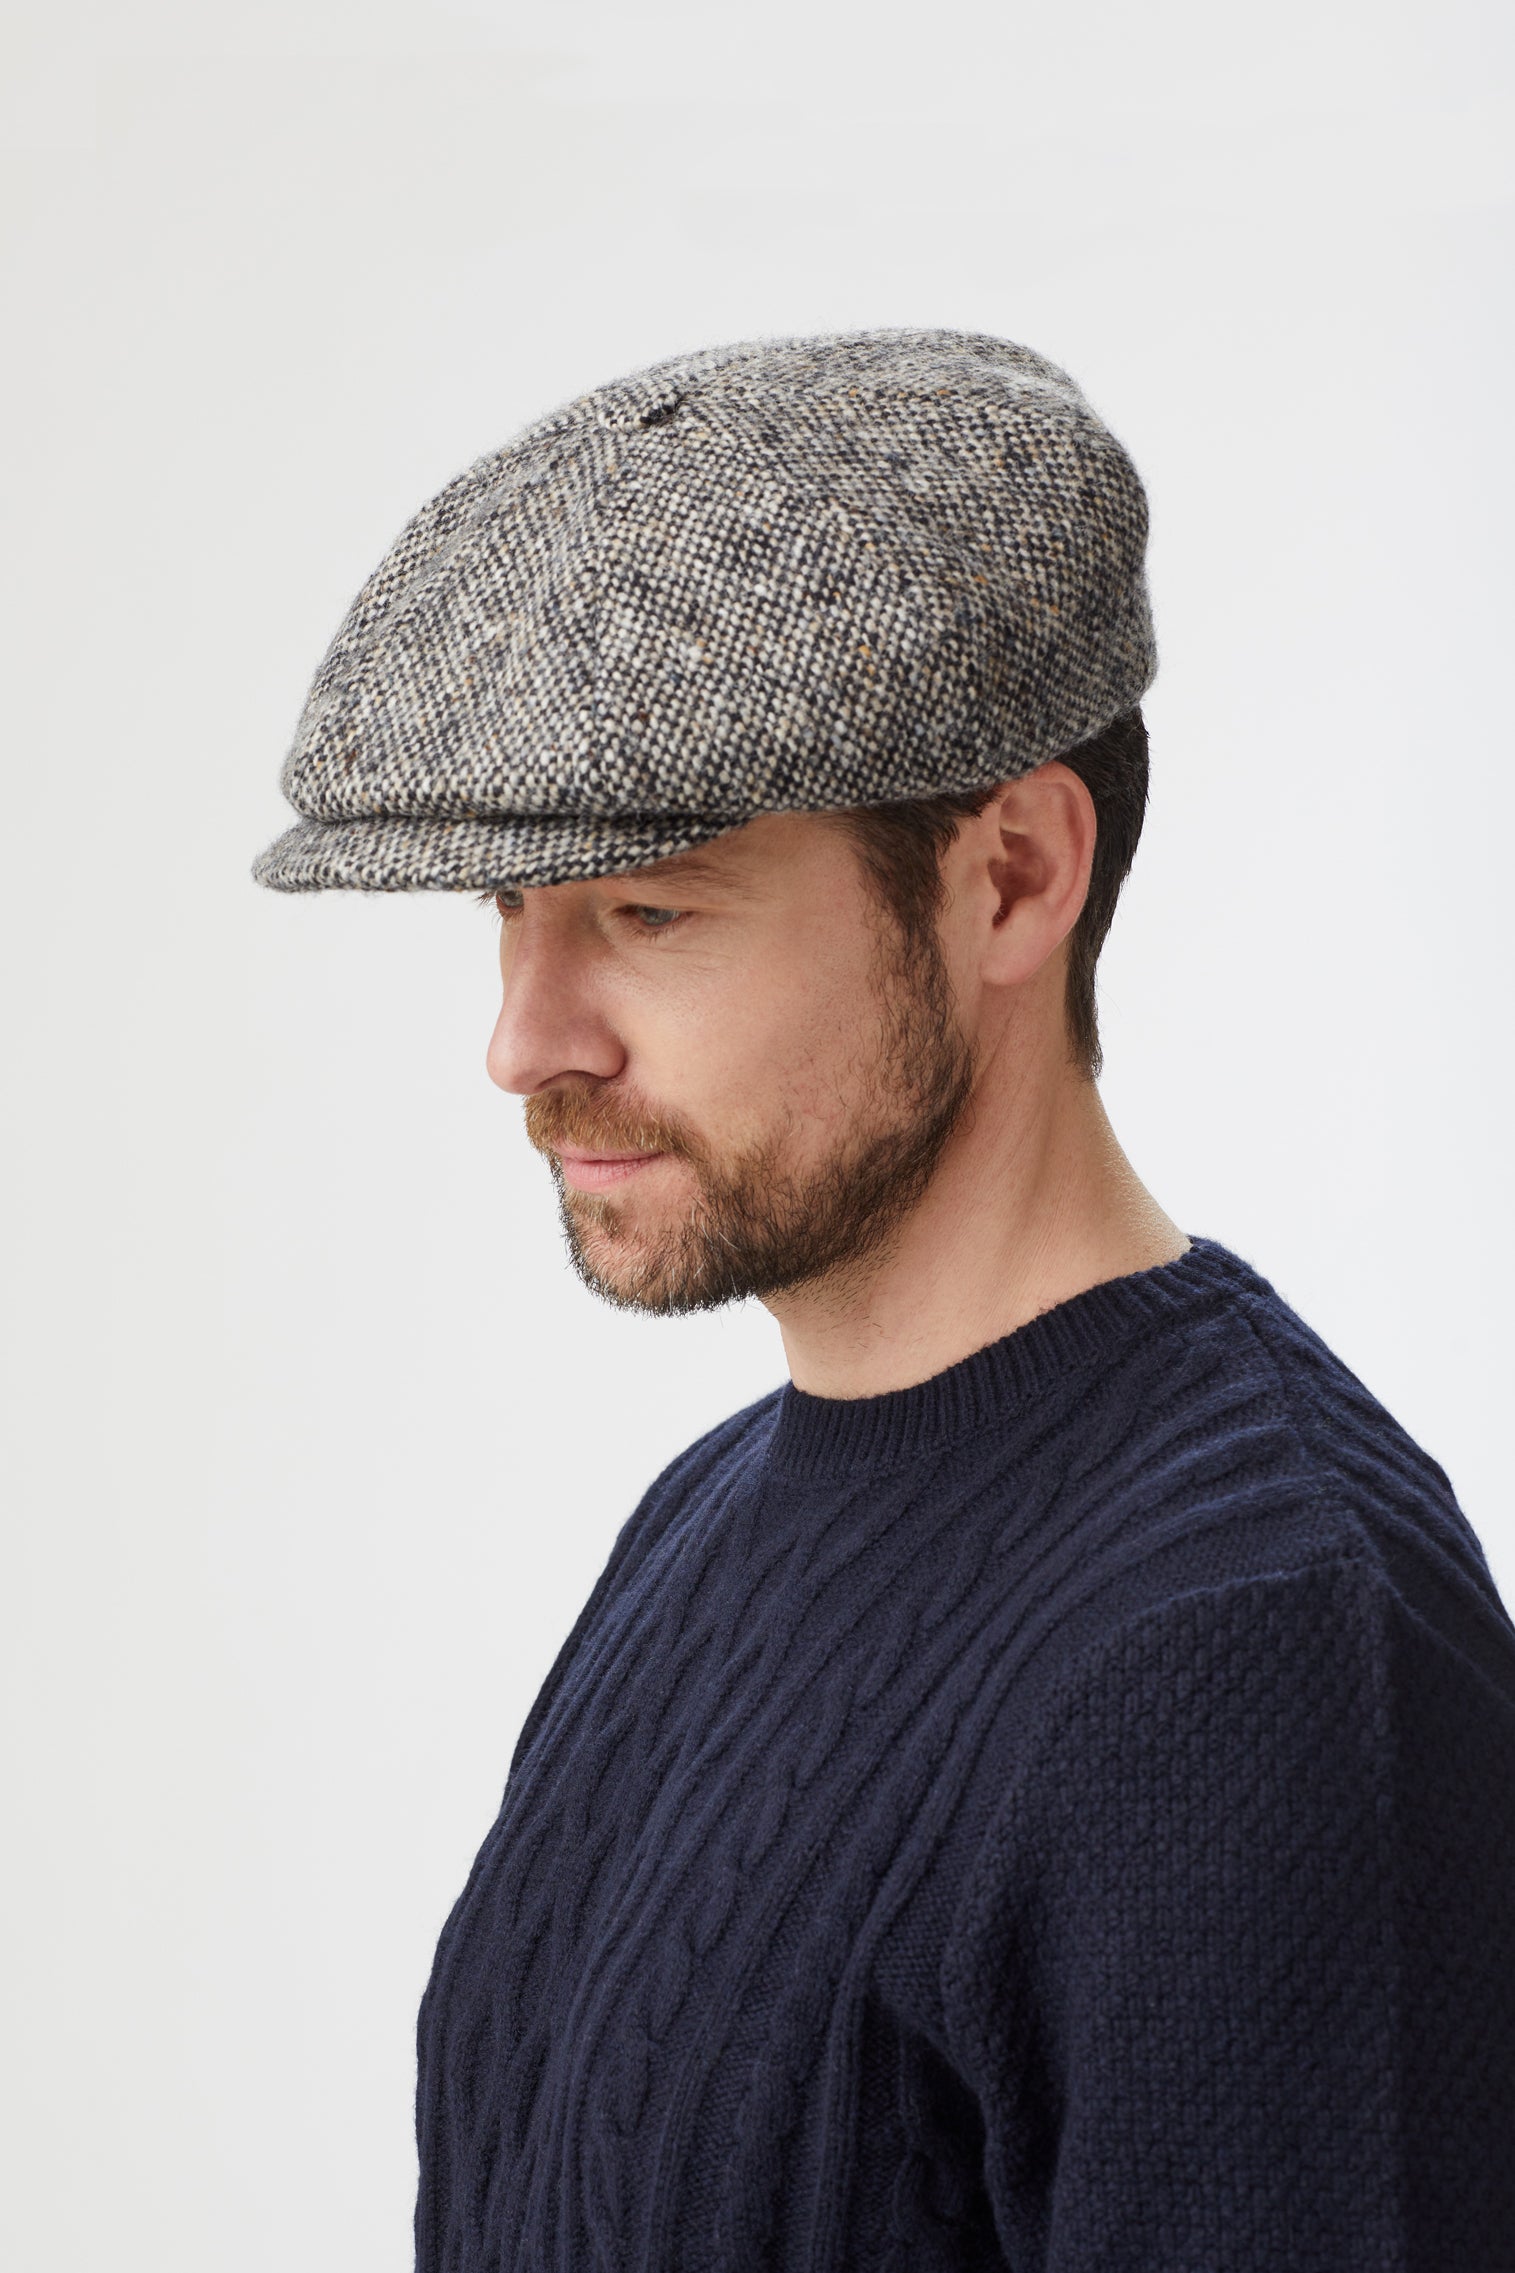 Muirfield Tweed Bakerboy Cap - Hats for Tall People - Lock & Co. Hatters London UK